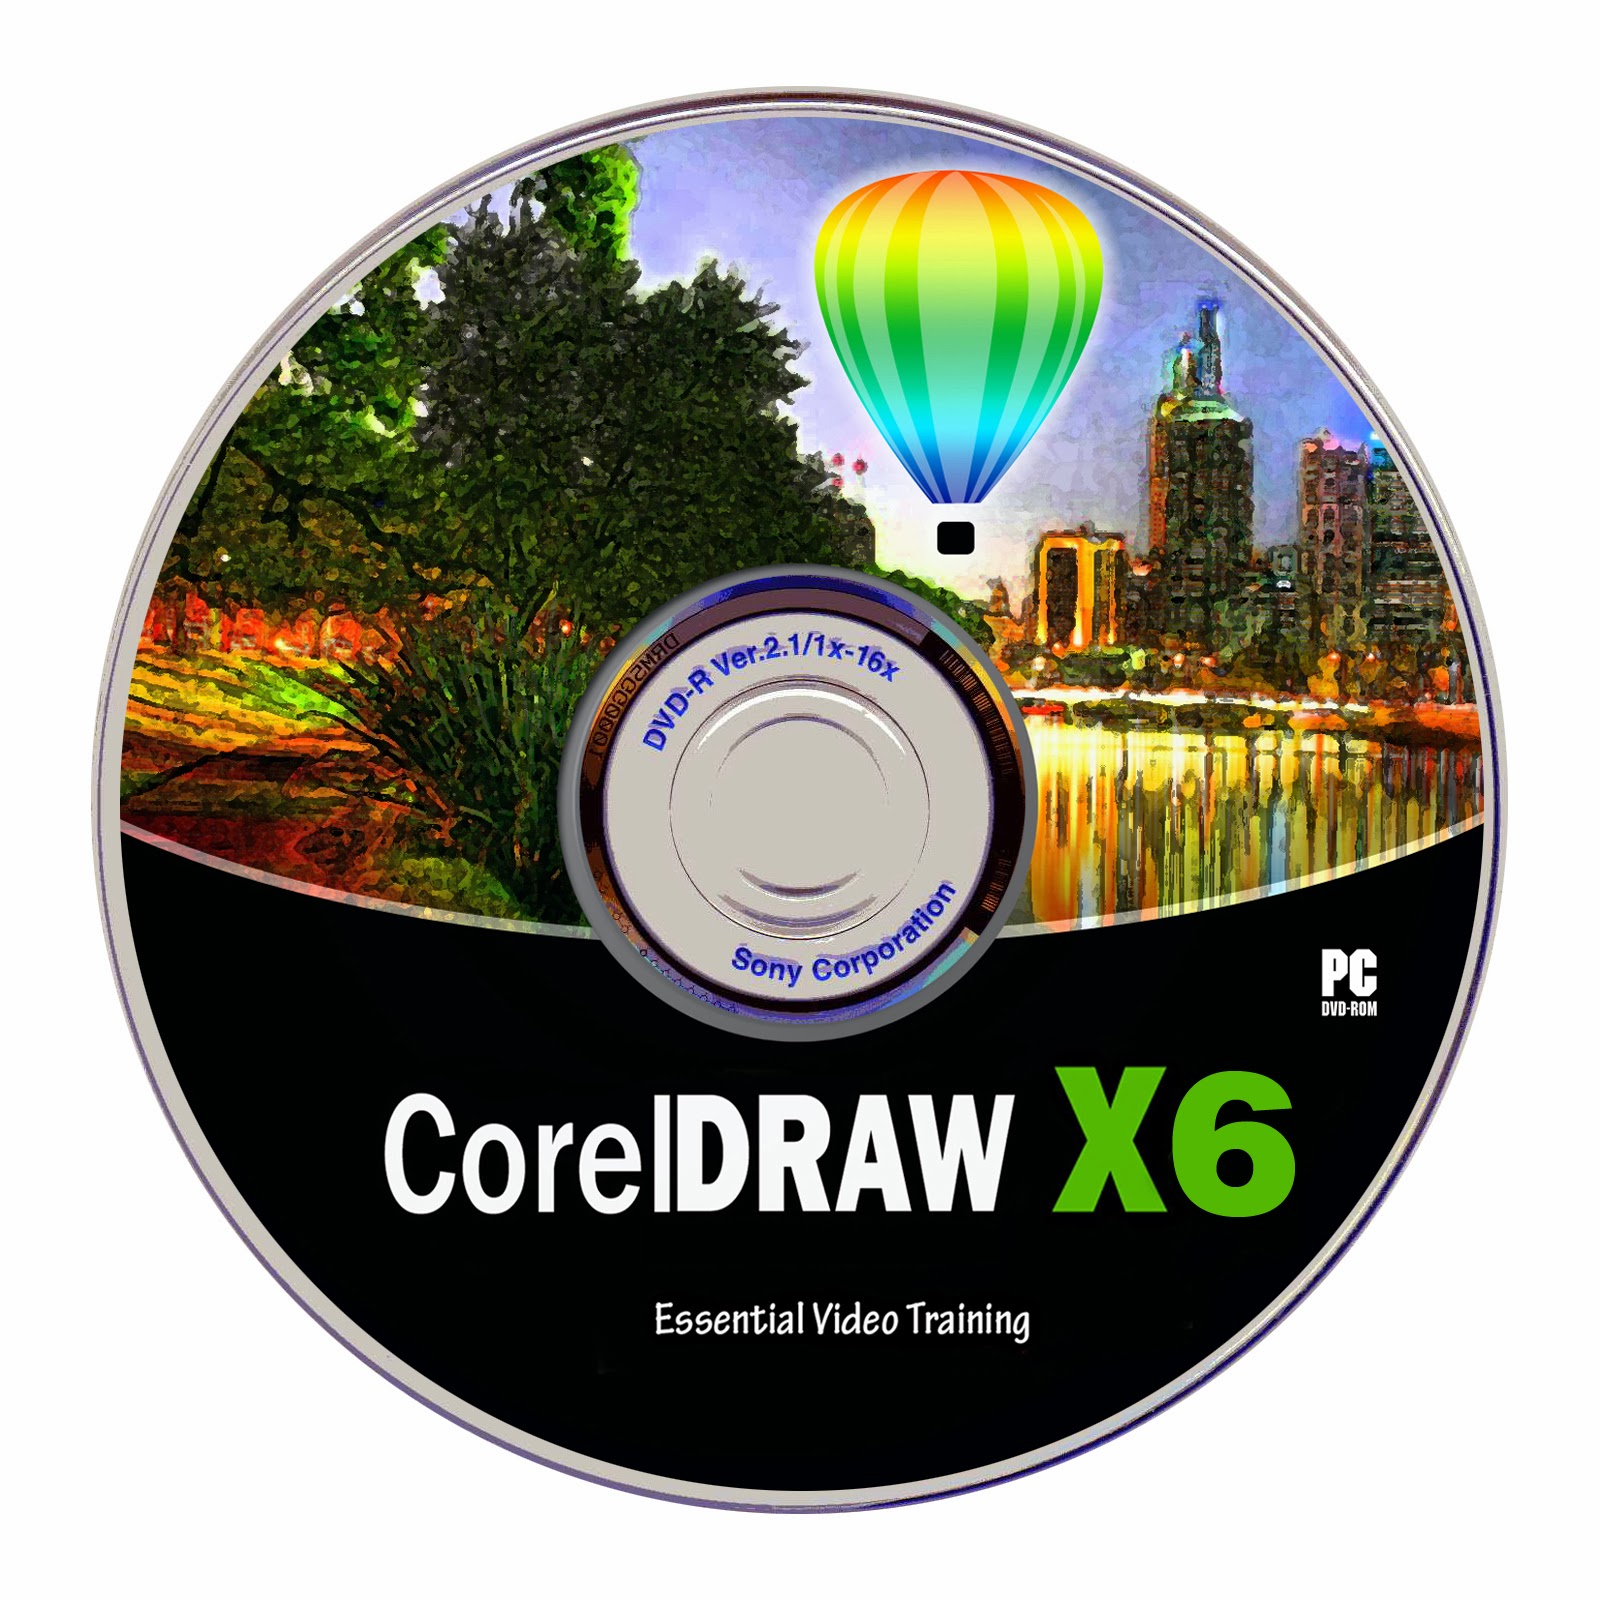 Tutorials DVD world: CorelDRAW X6 Video Training Tutorial DVD Rs 299/-